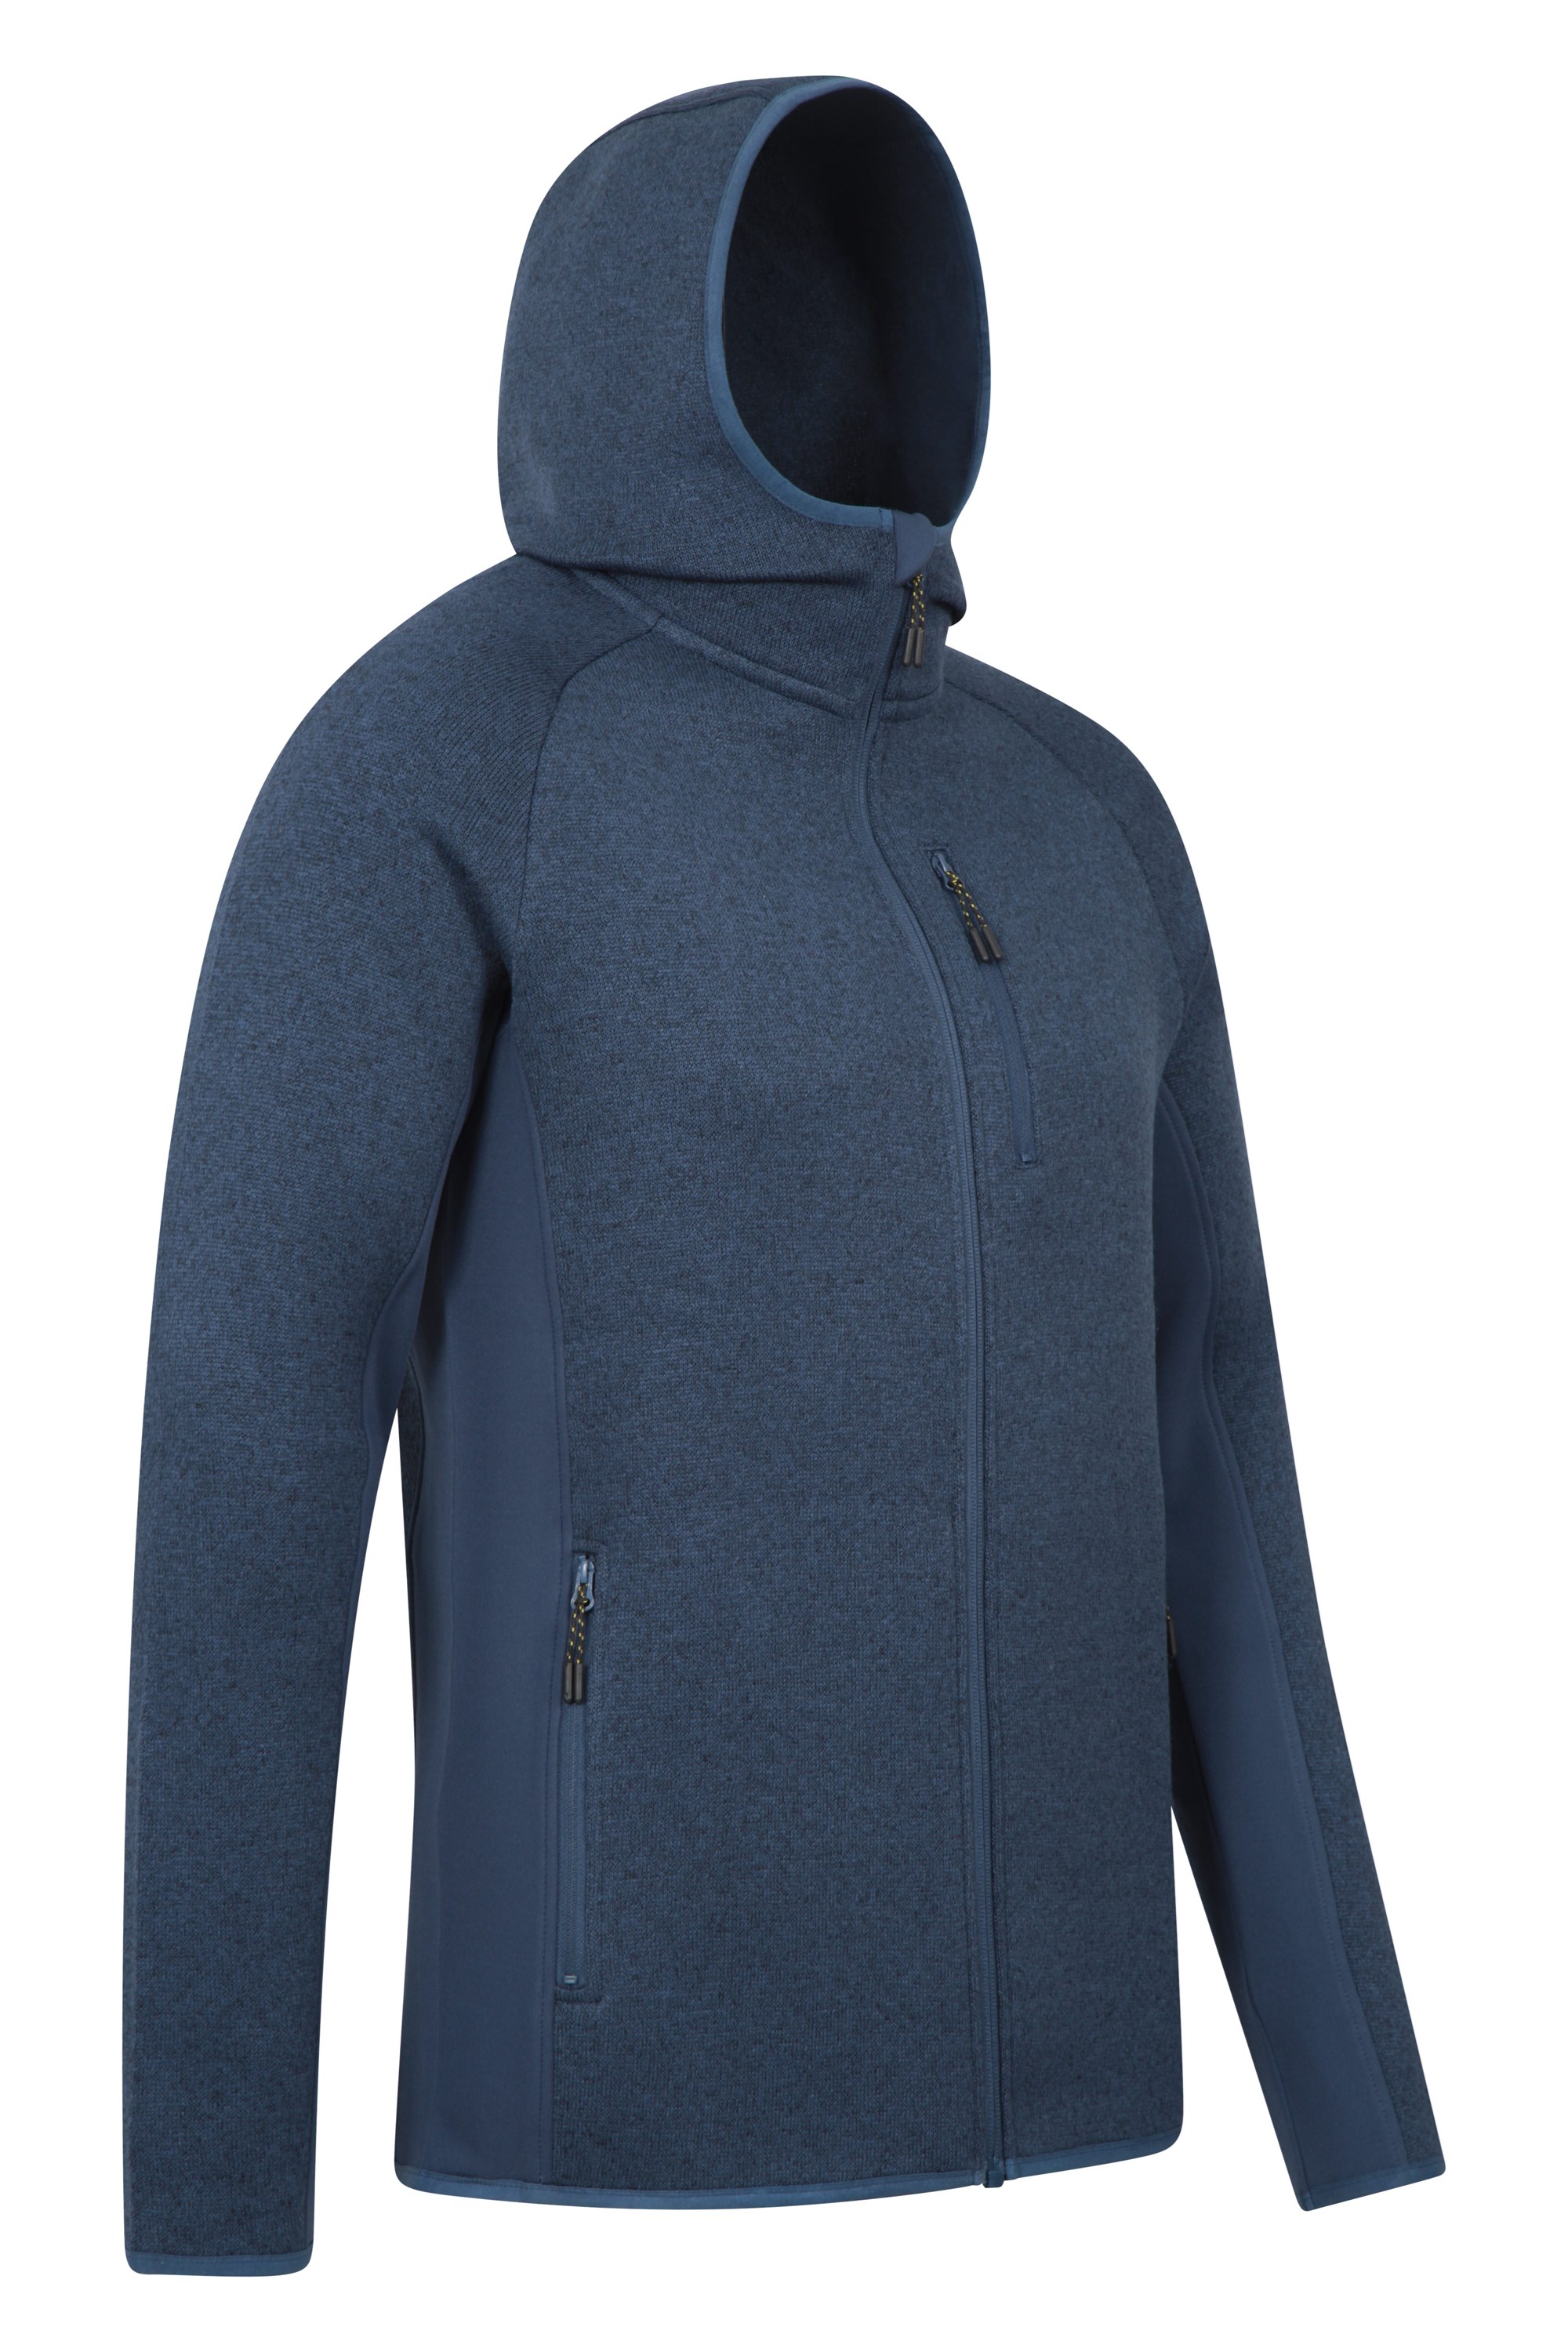 Mountain Warehouse Treston Mens Full-Zip Fleece Jacket Black X-Small